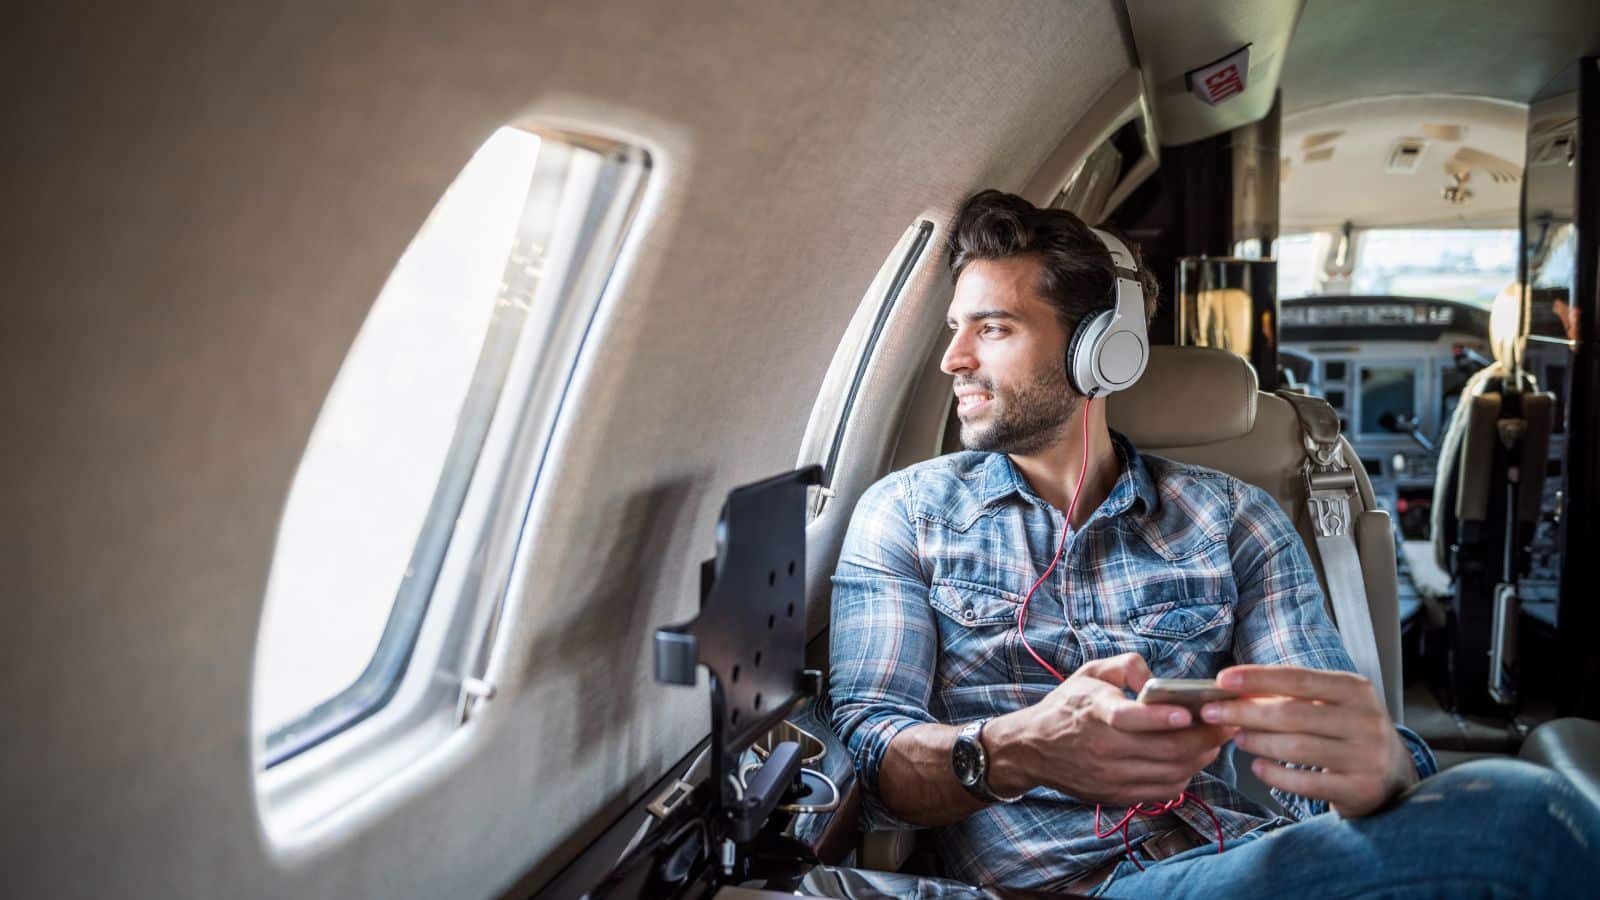 Headphones on an airplane msn